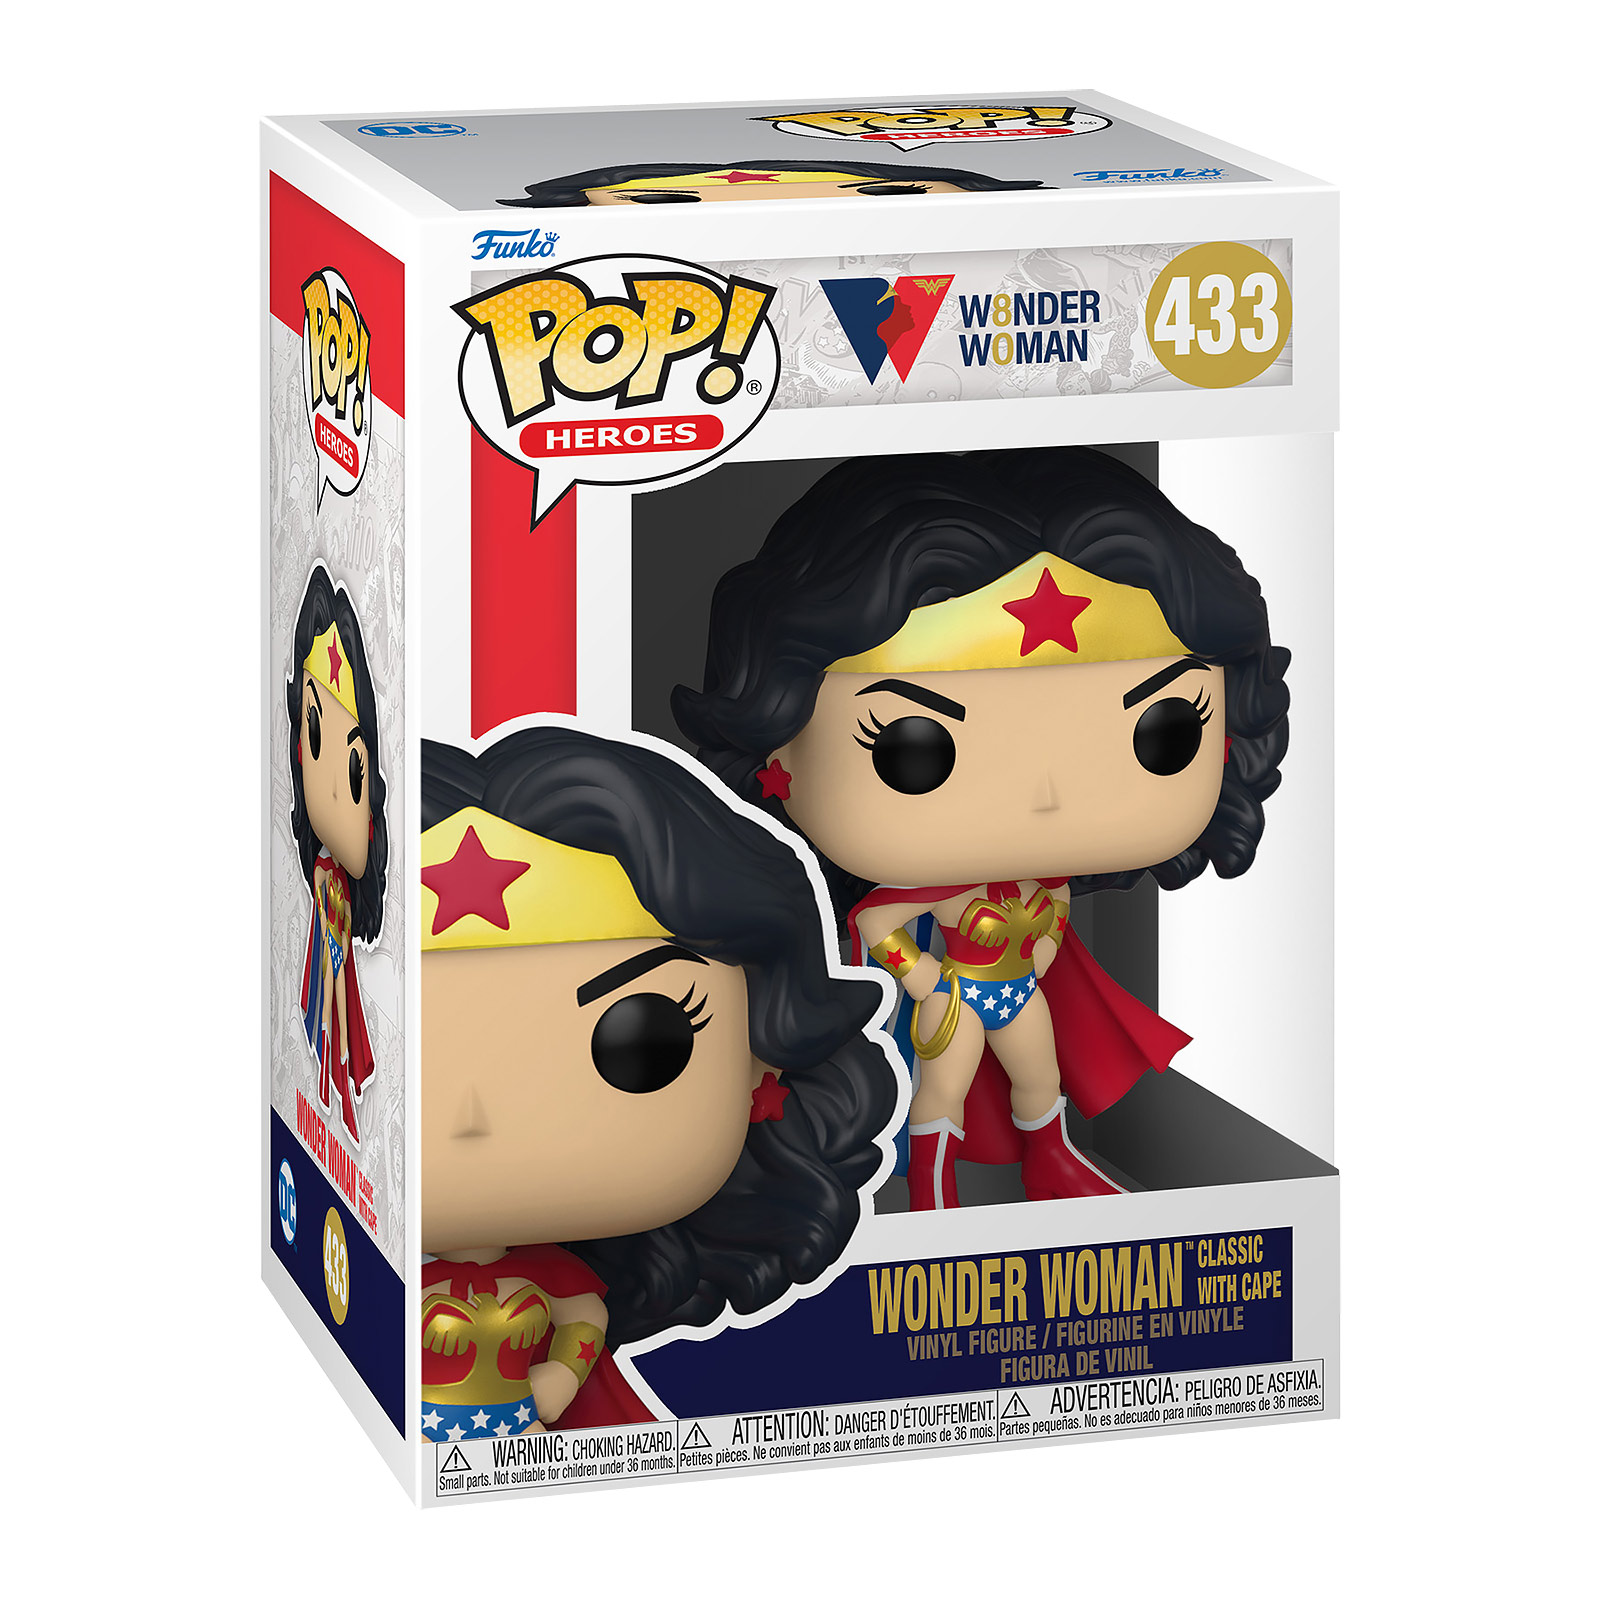 Wonder Woman with Cape Funko Pop Figure